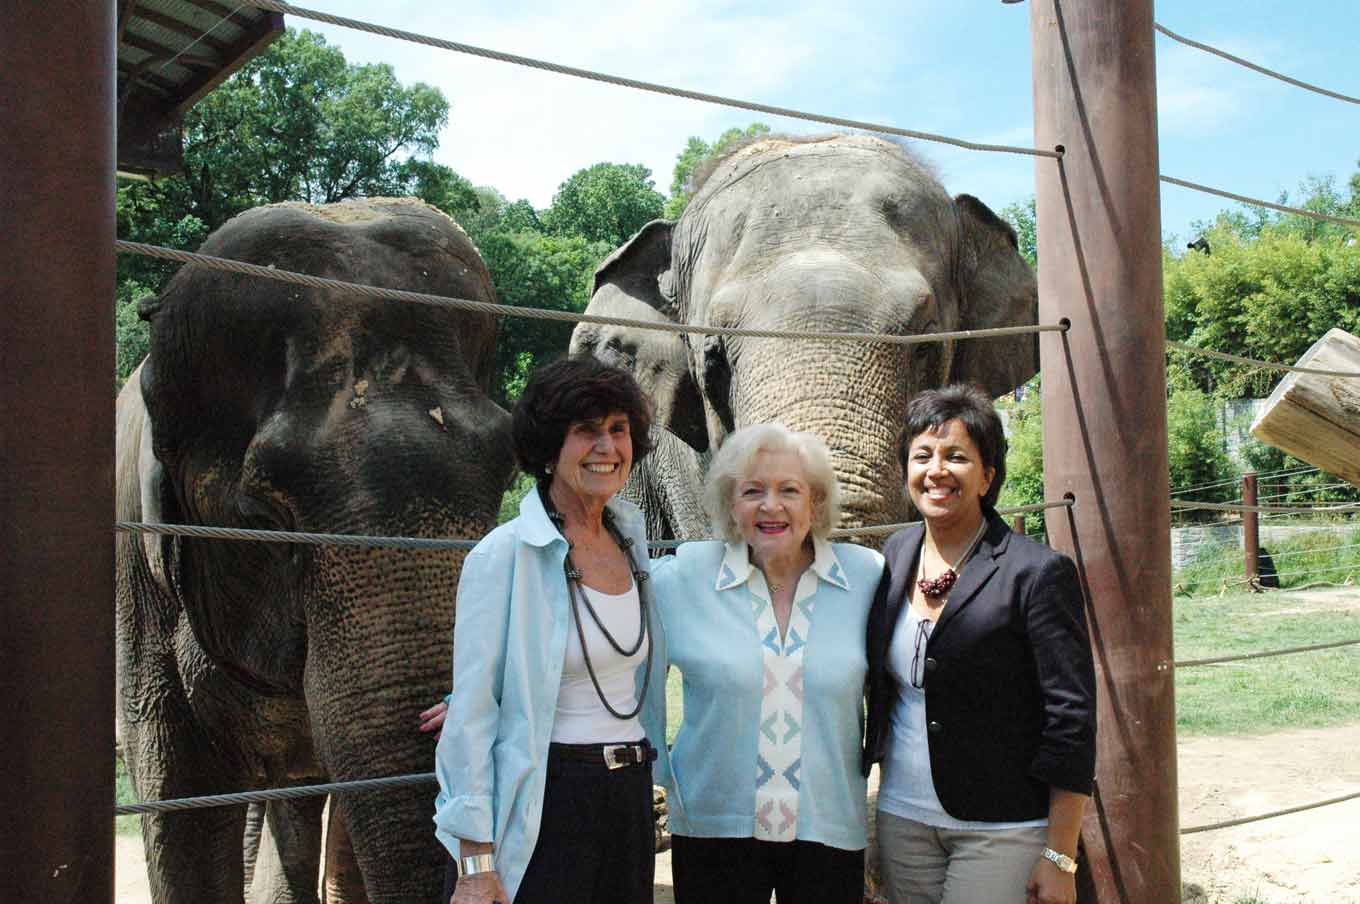 Betty White met olifanten in de dierentuin